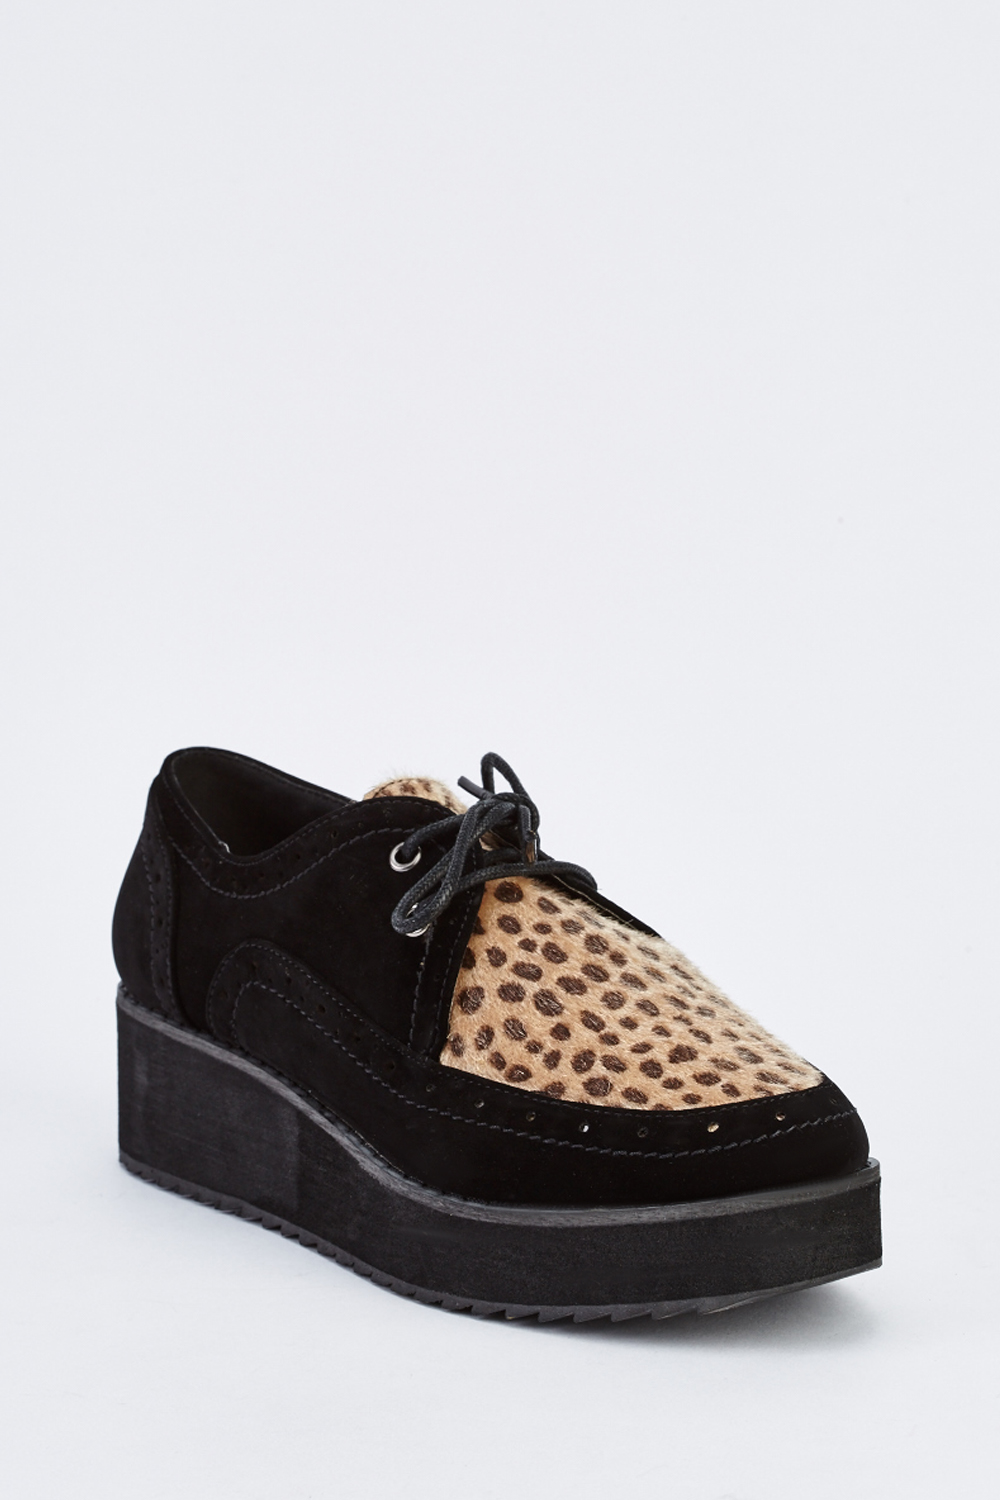 Leopard Print Creeper Shoes - Just $7